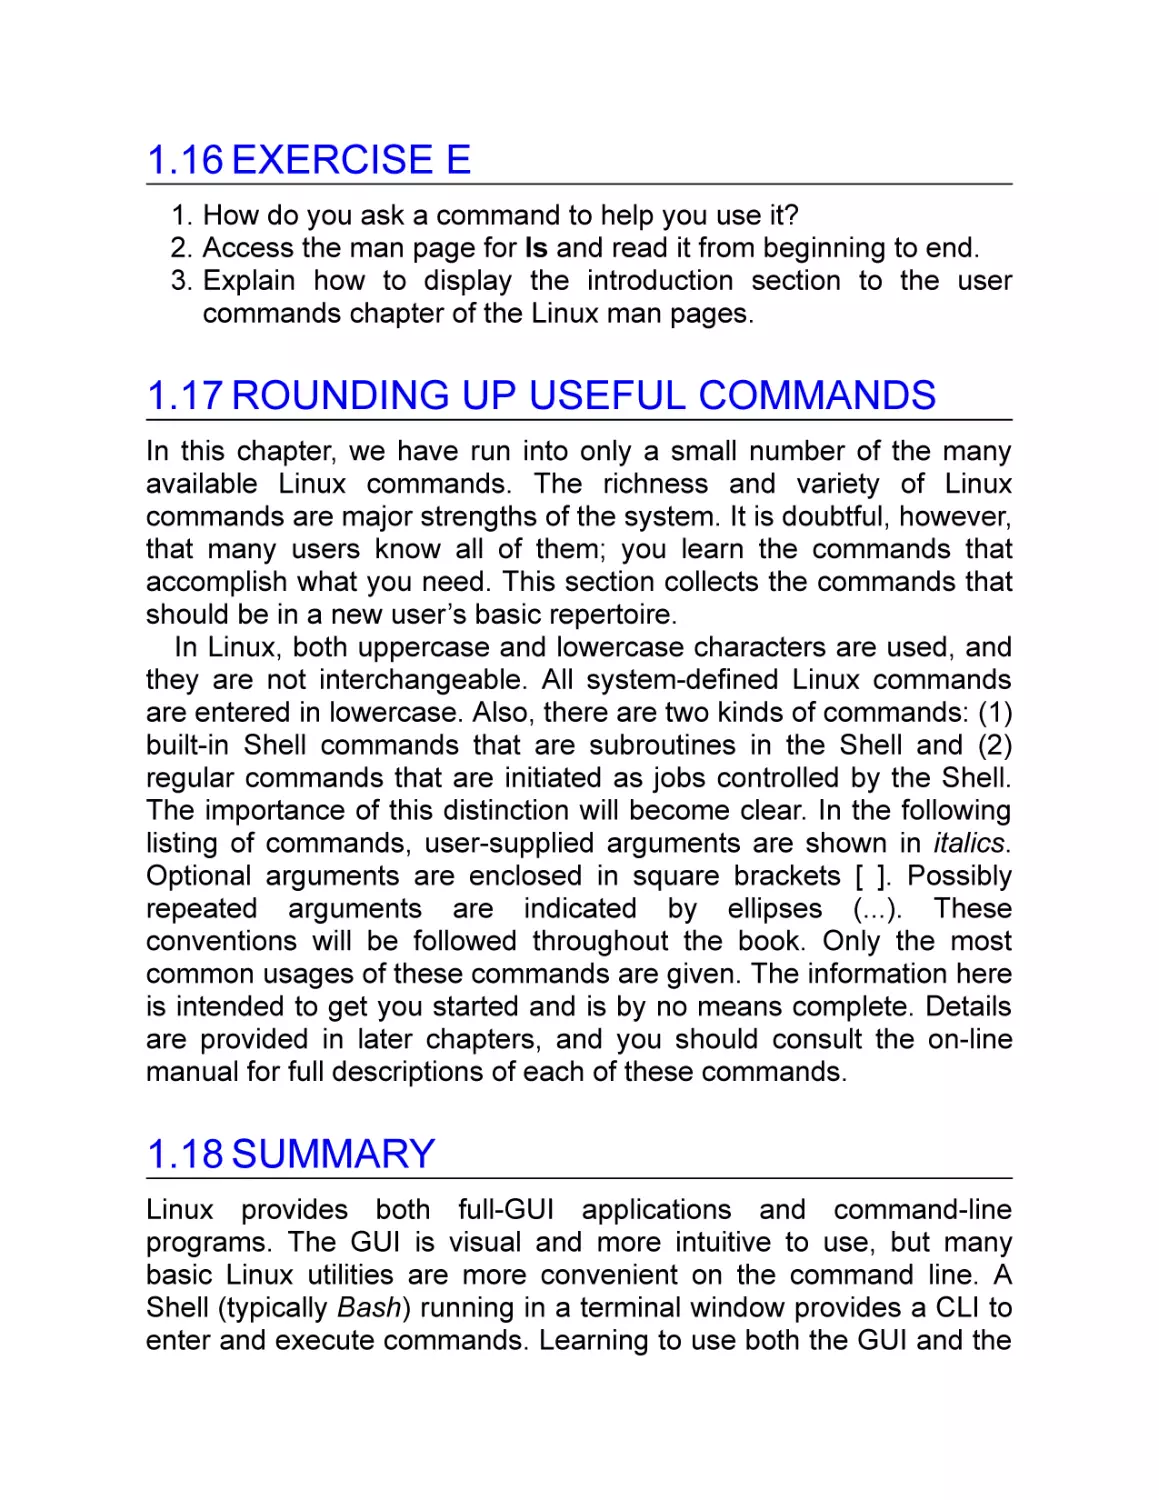 1.16 Exercise E
1.17 Rounding Up Useful Commands
1.18 Summary